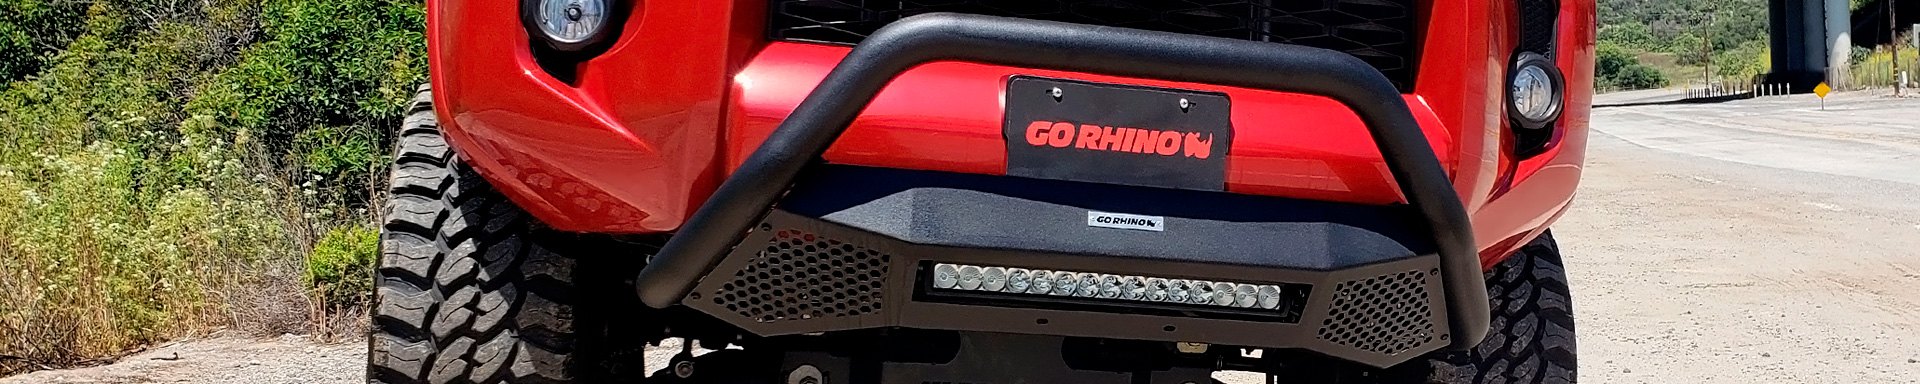 Meet The New Go Rhino RC4 Light Ready Bull Bar for Trucks & SUV